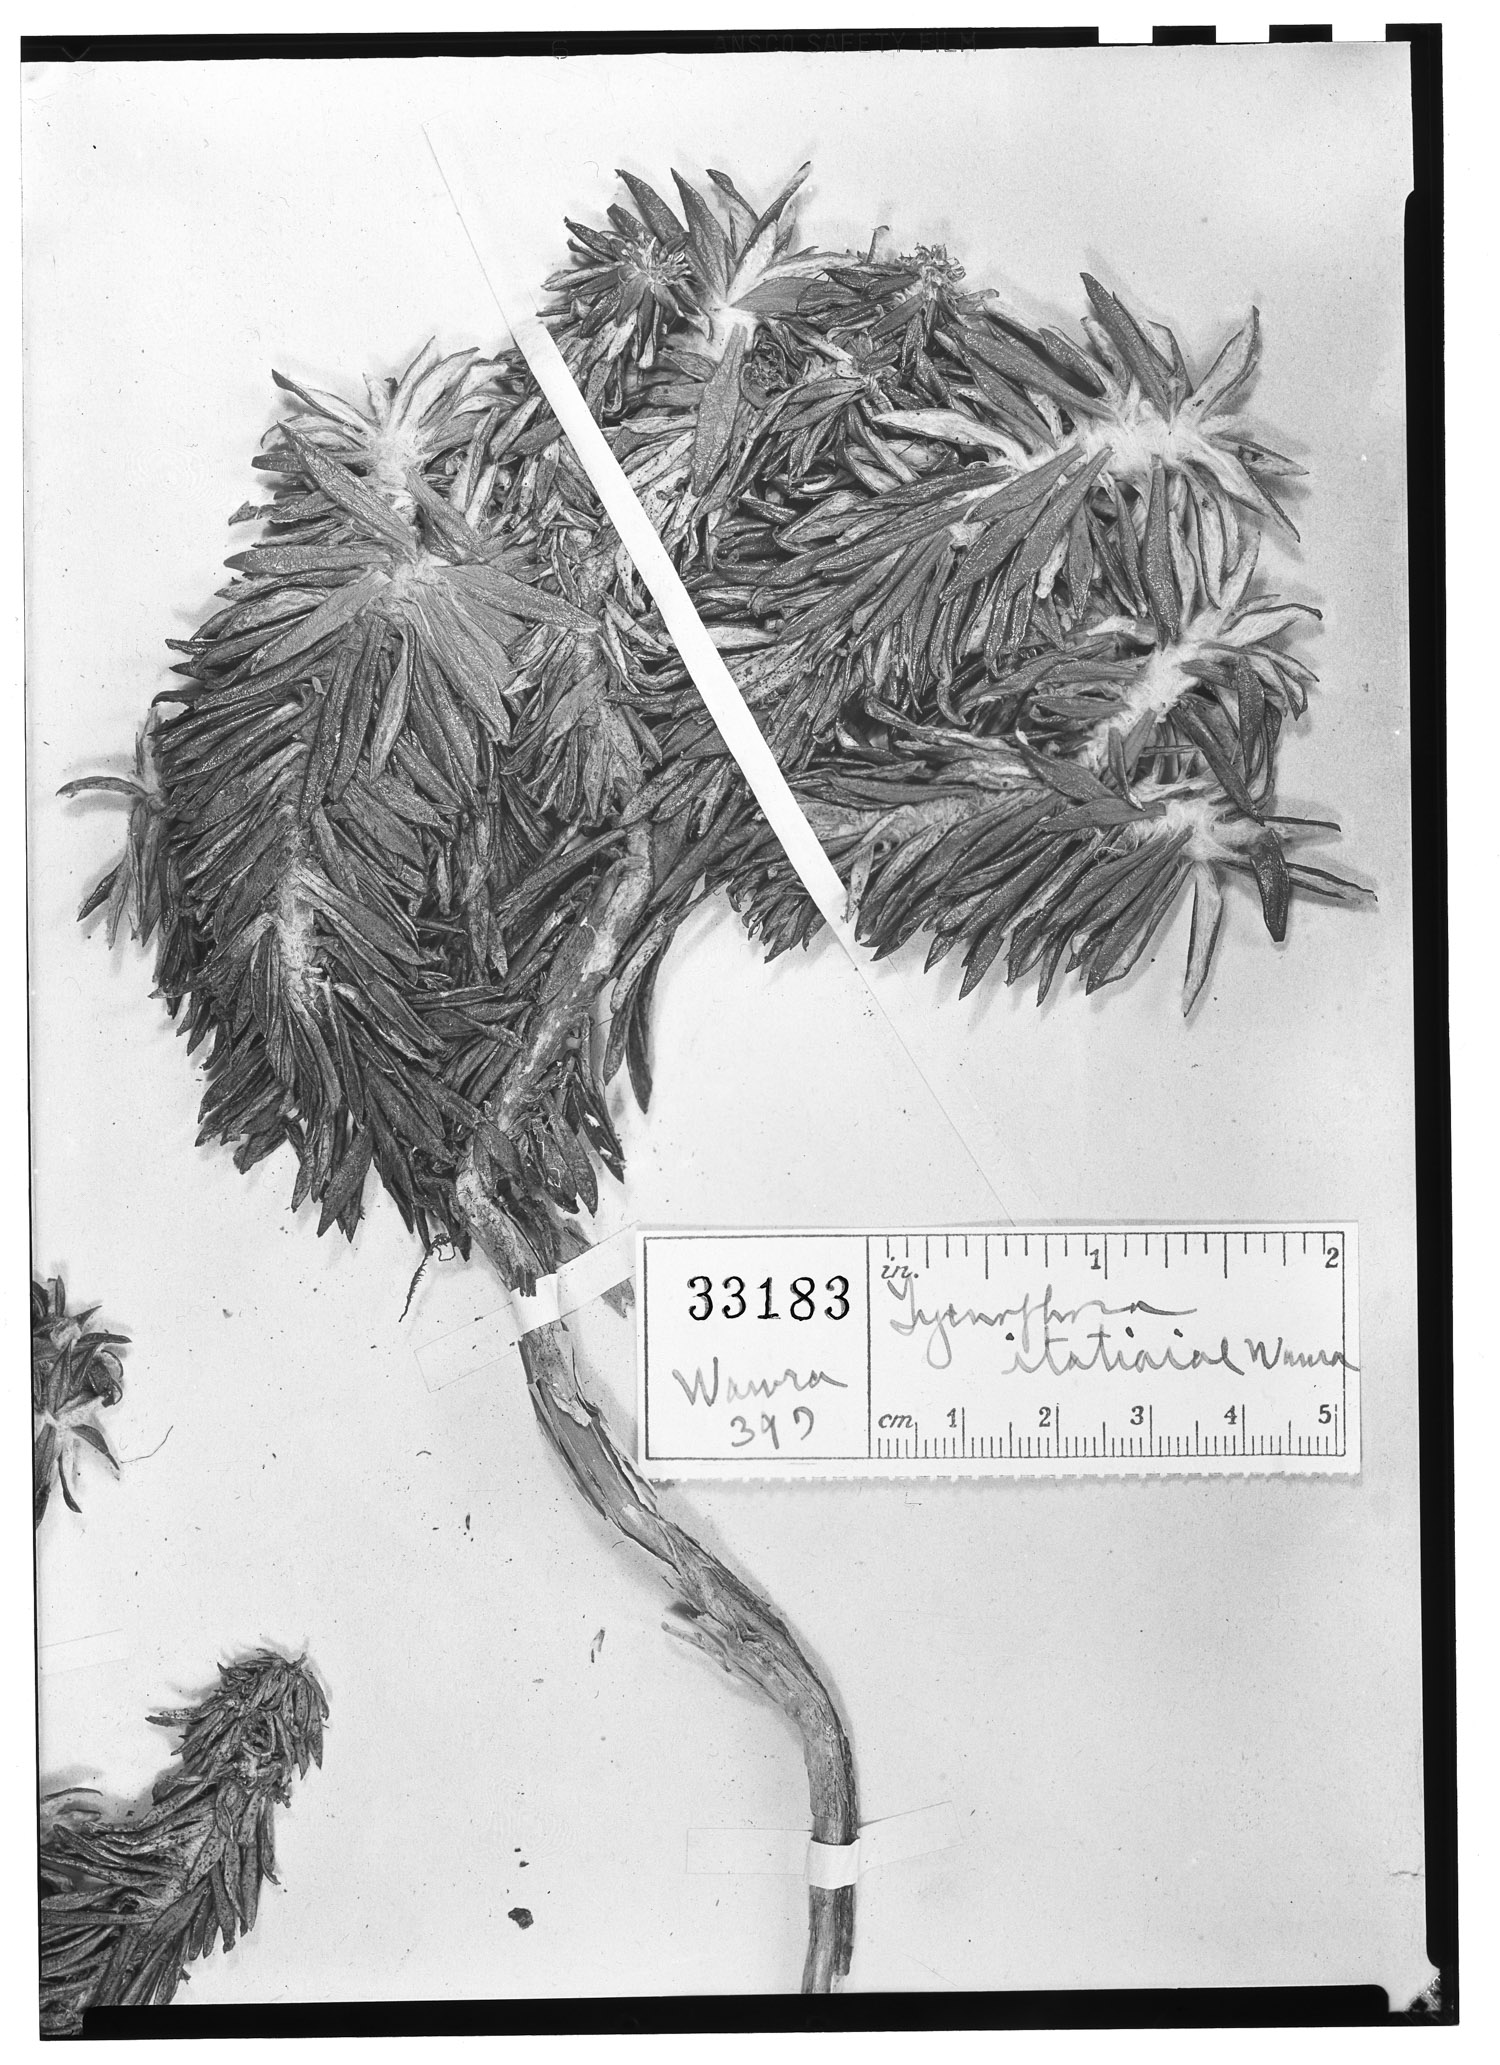 Lychnophora itatiaiae image